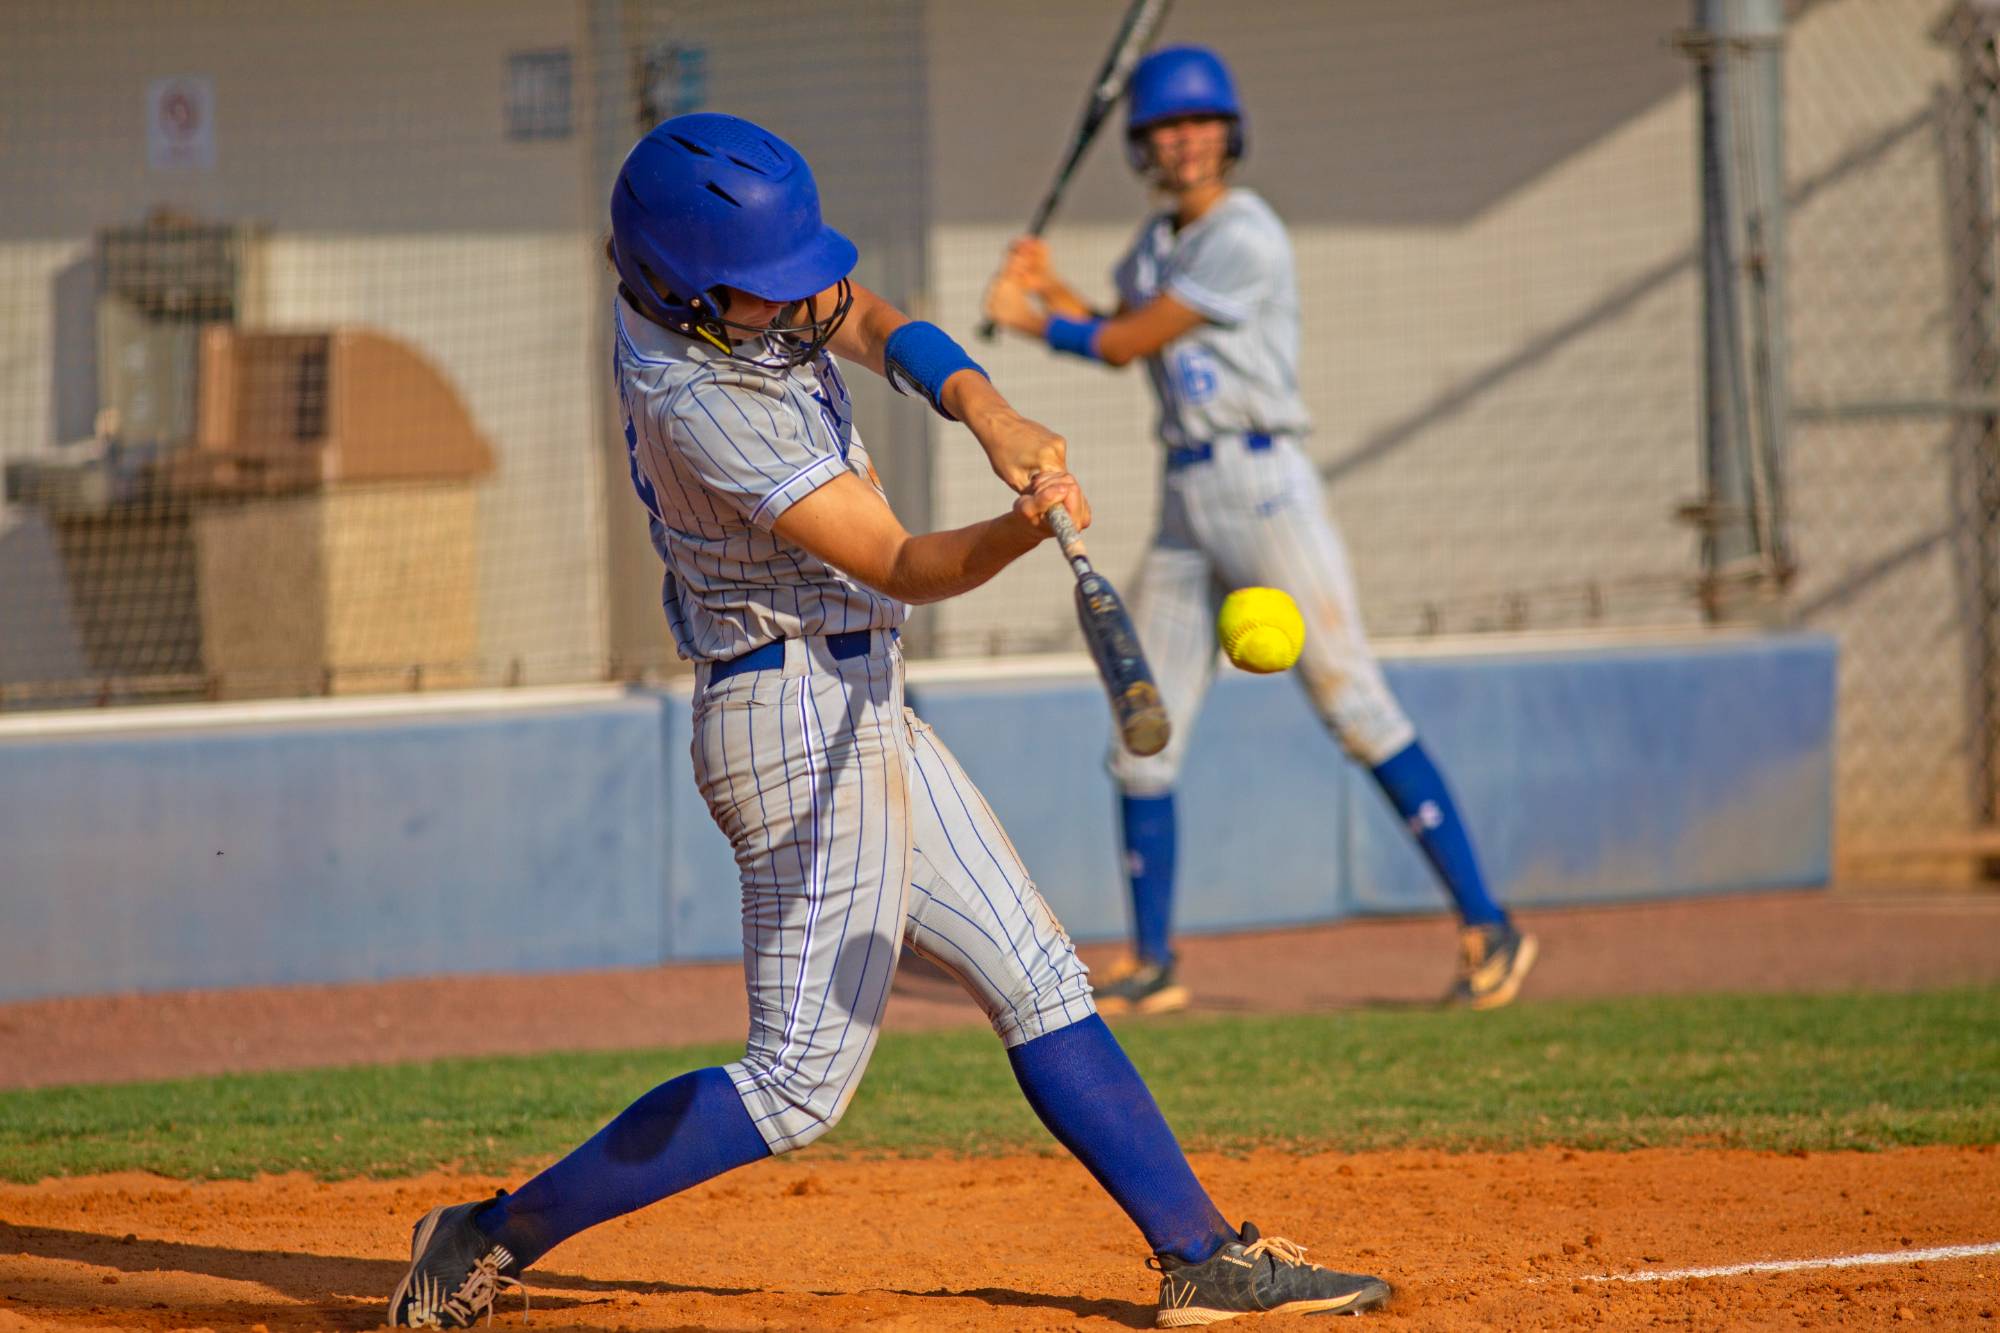 A softball player at bat. 